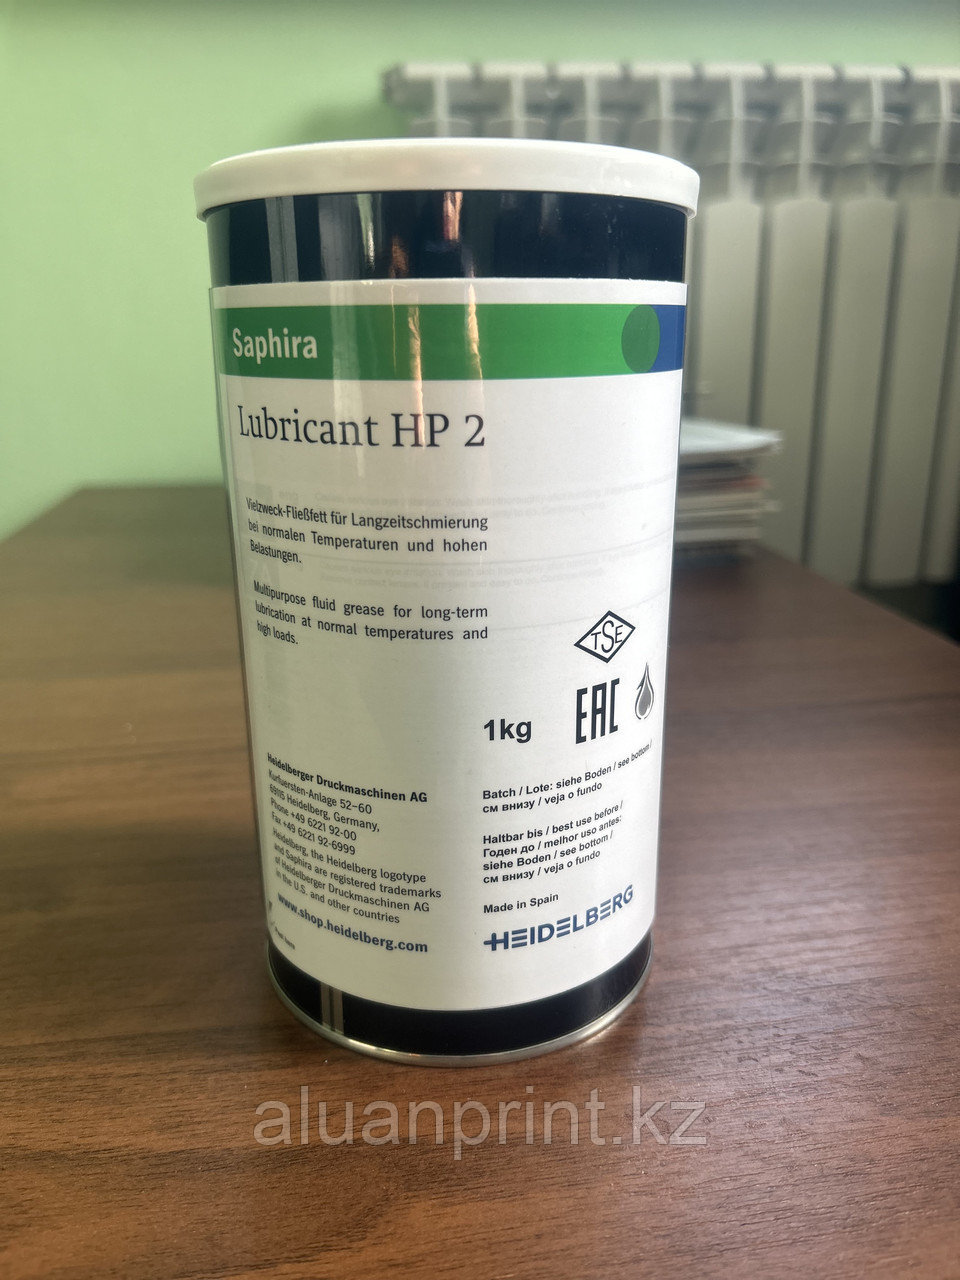 Смазывающее масло Saphira HP2, HEIDELBERG. (лубрикант)